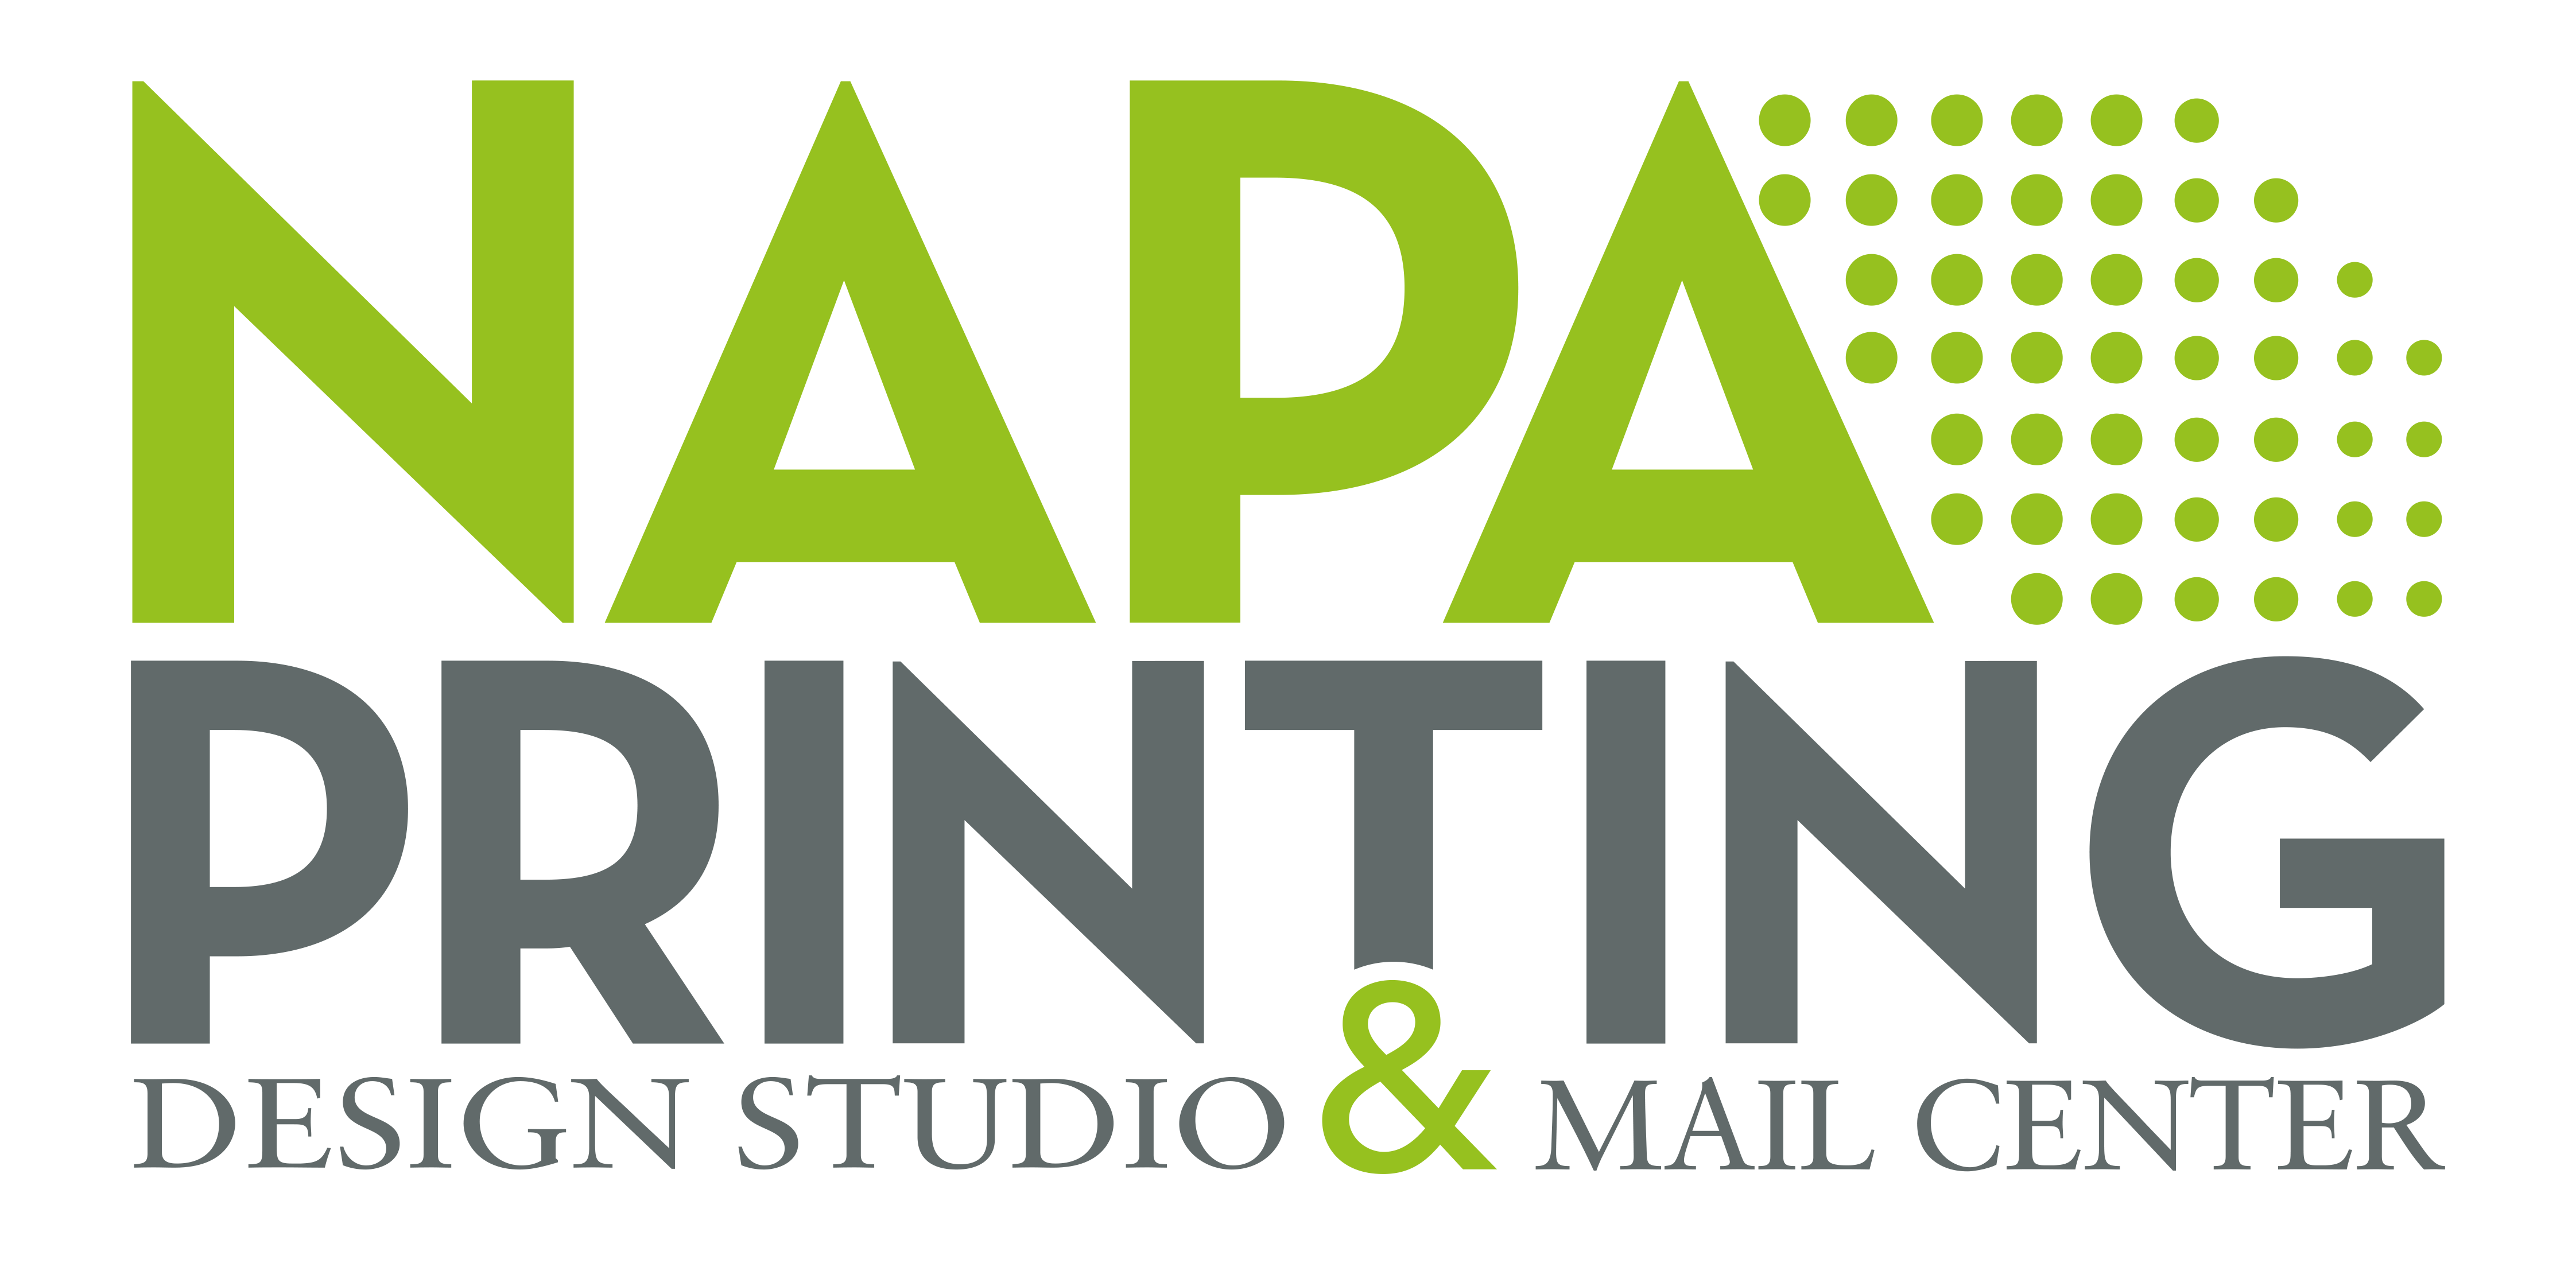 Napa Printing Design Studio & Mail Center